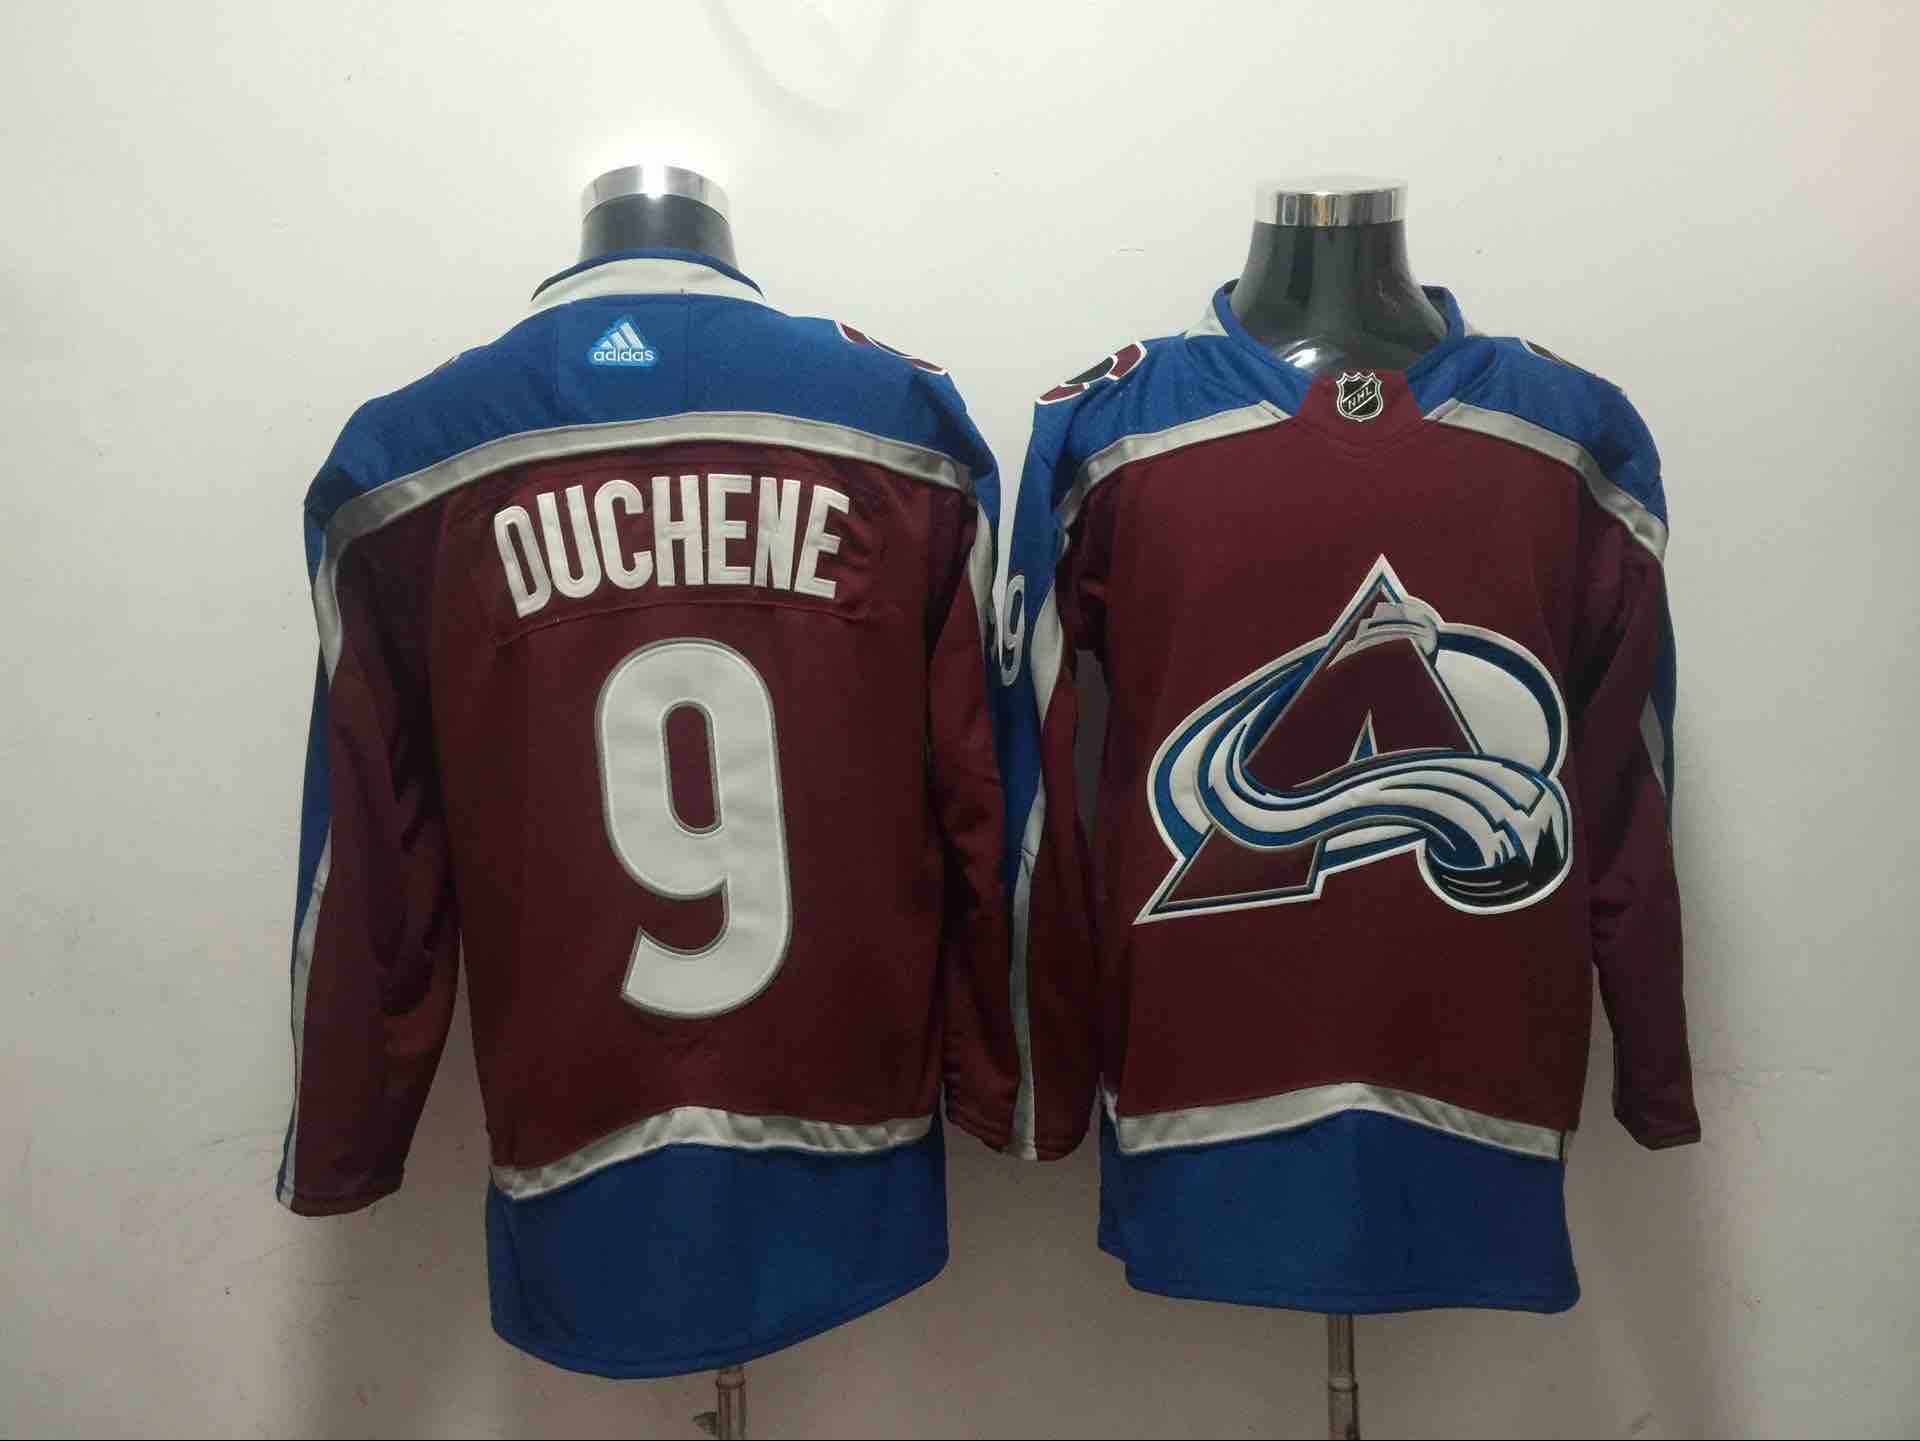 Adidas NHL Colorado Avalanche #9 Duchene Red Jersey